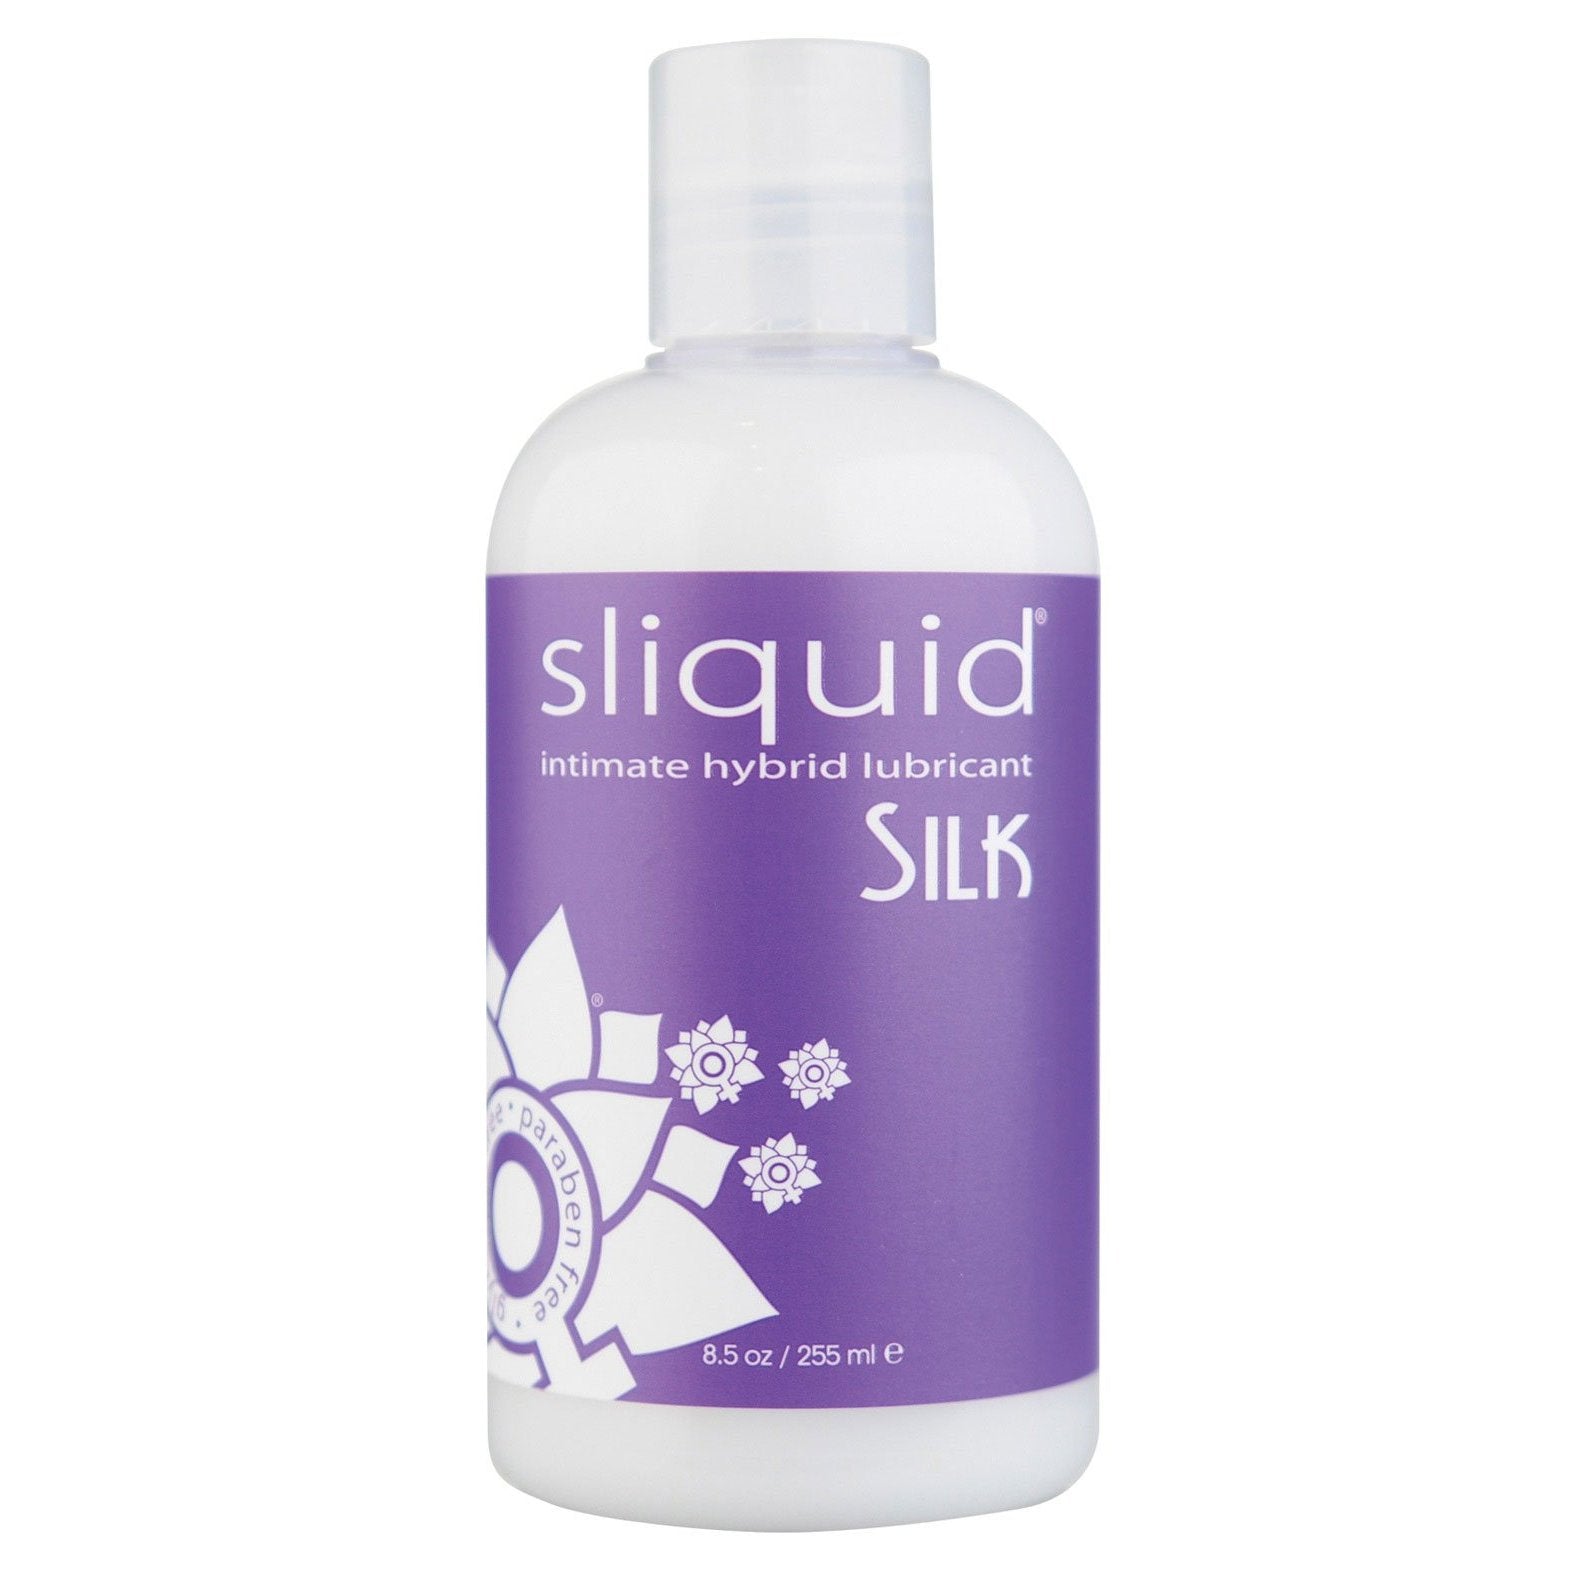 Sliquid Silk Hybrid Lube Glycerine & Paraben Free